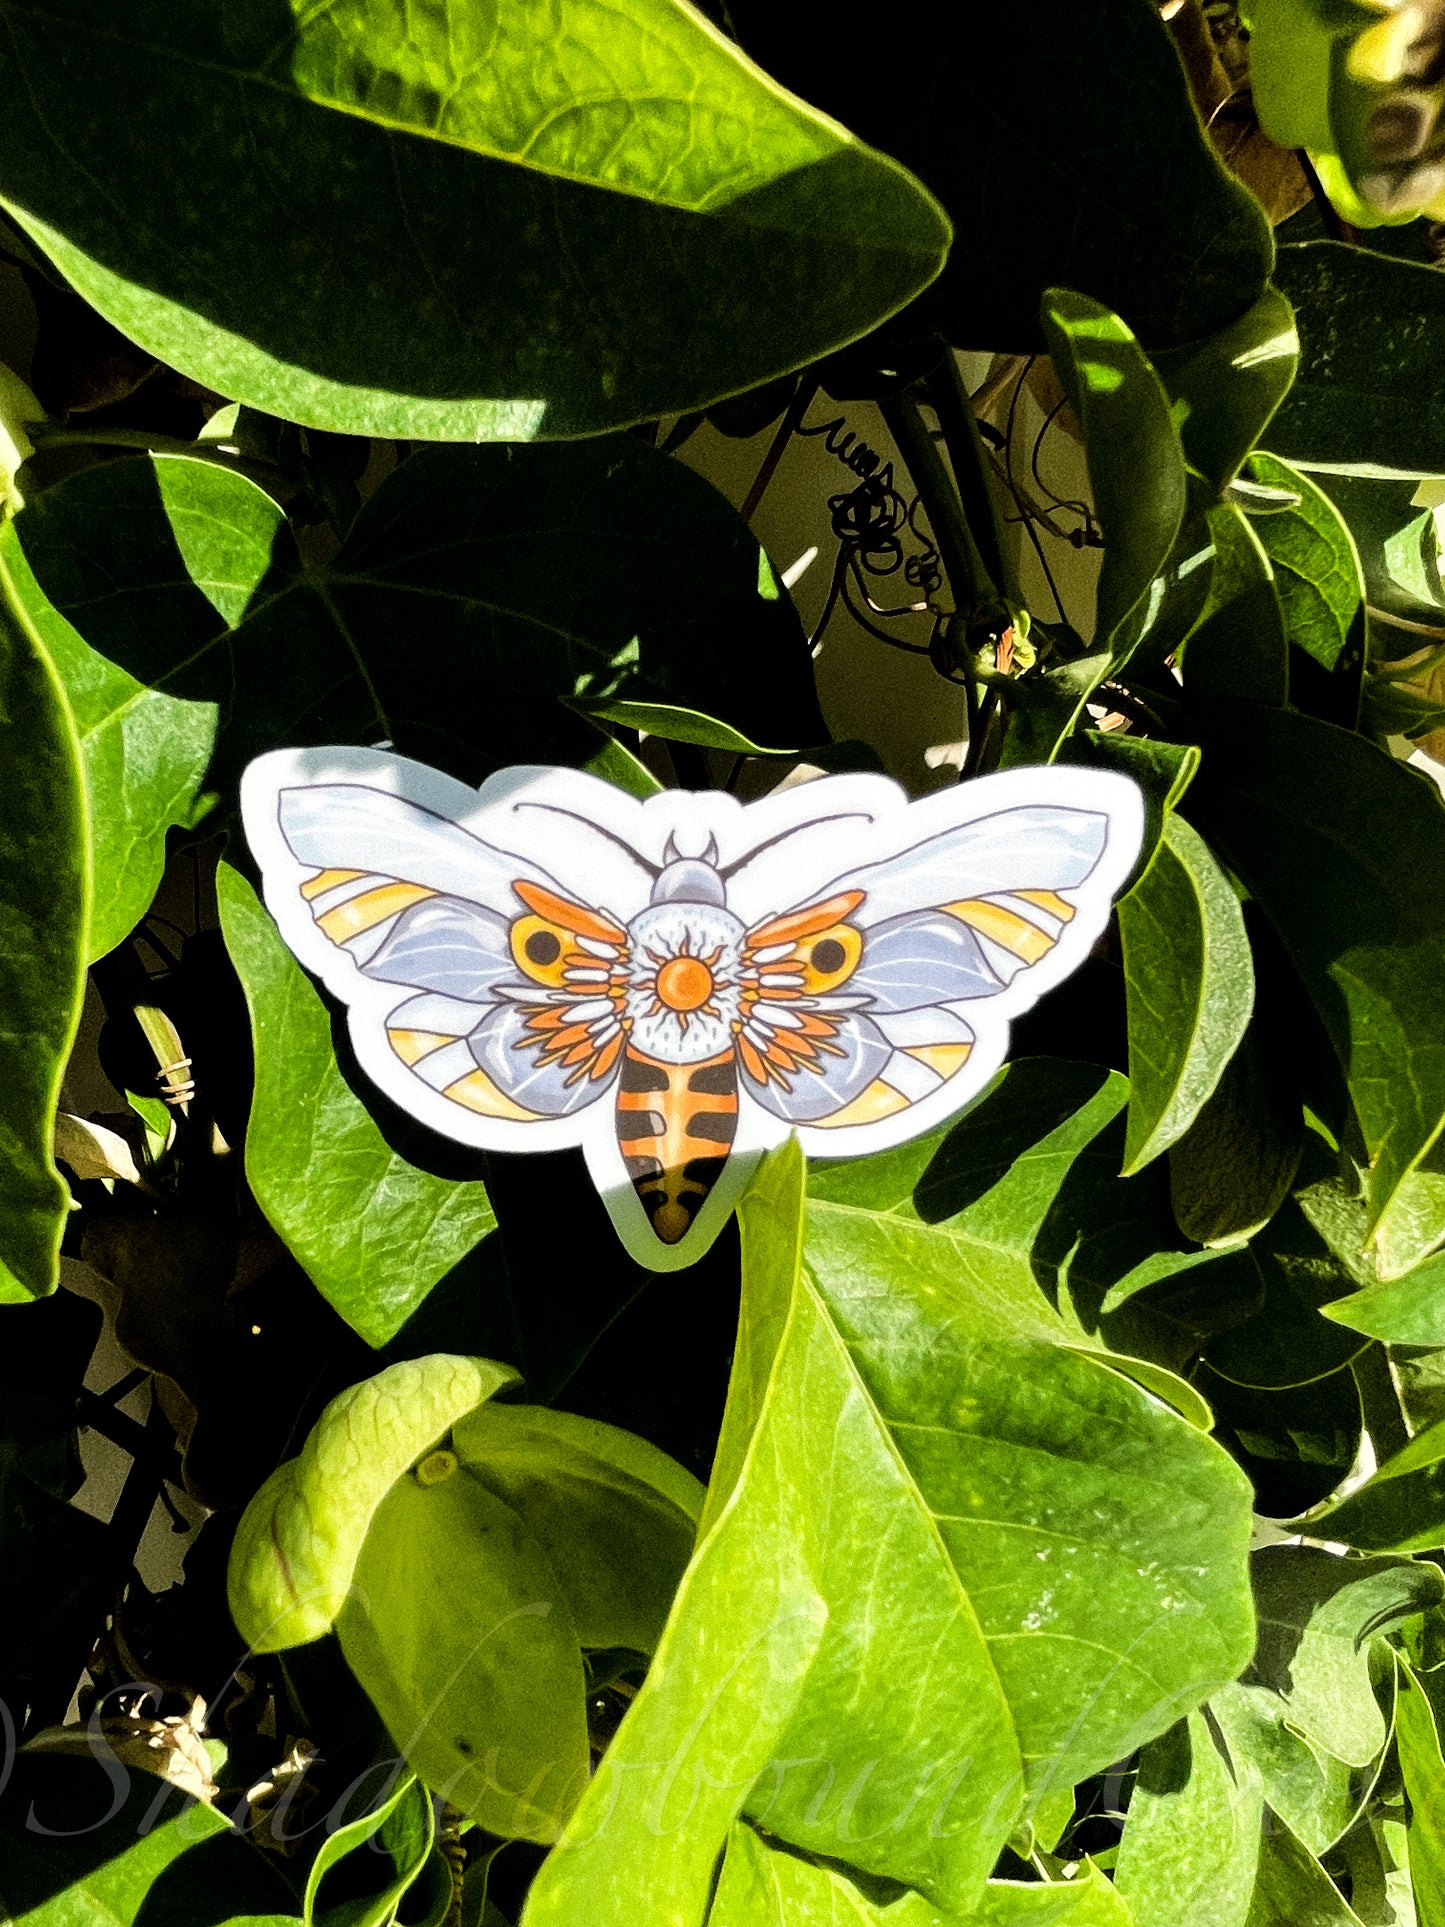 Celestial Moth - Waterproof vinyl sticker/decal